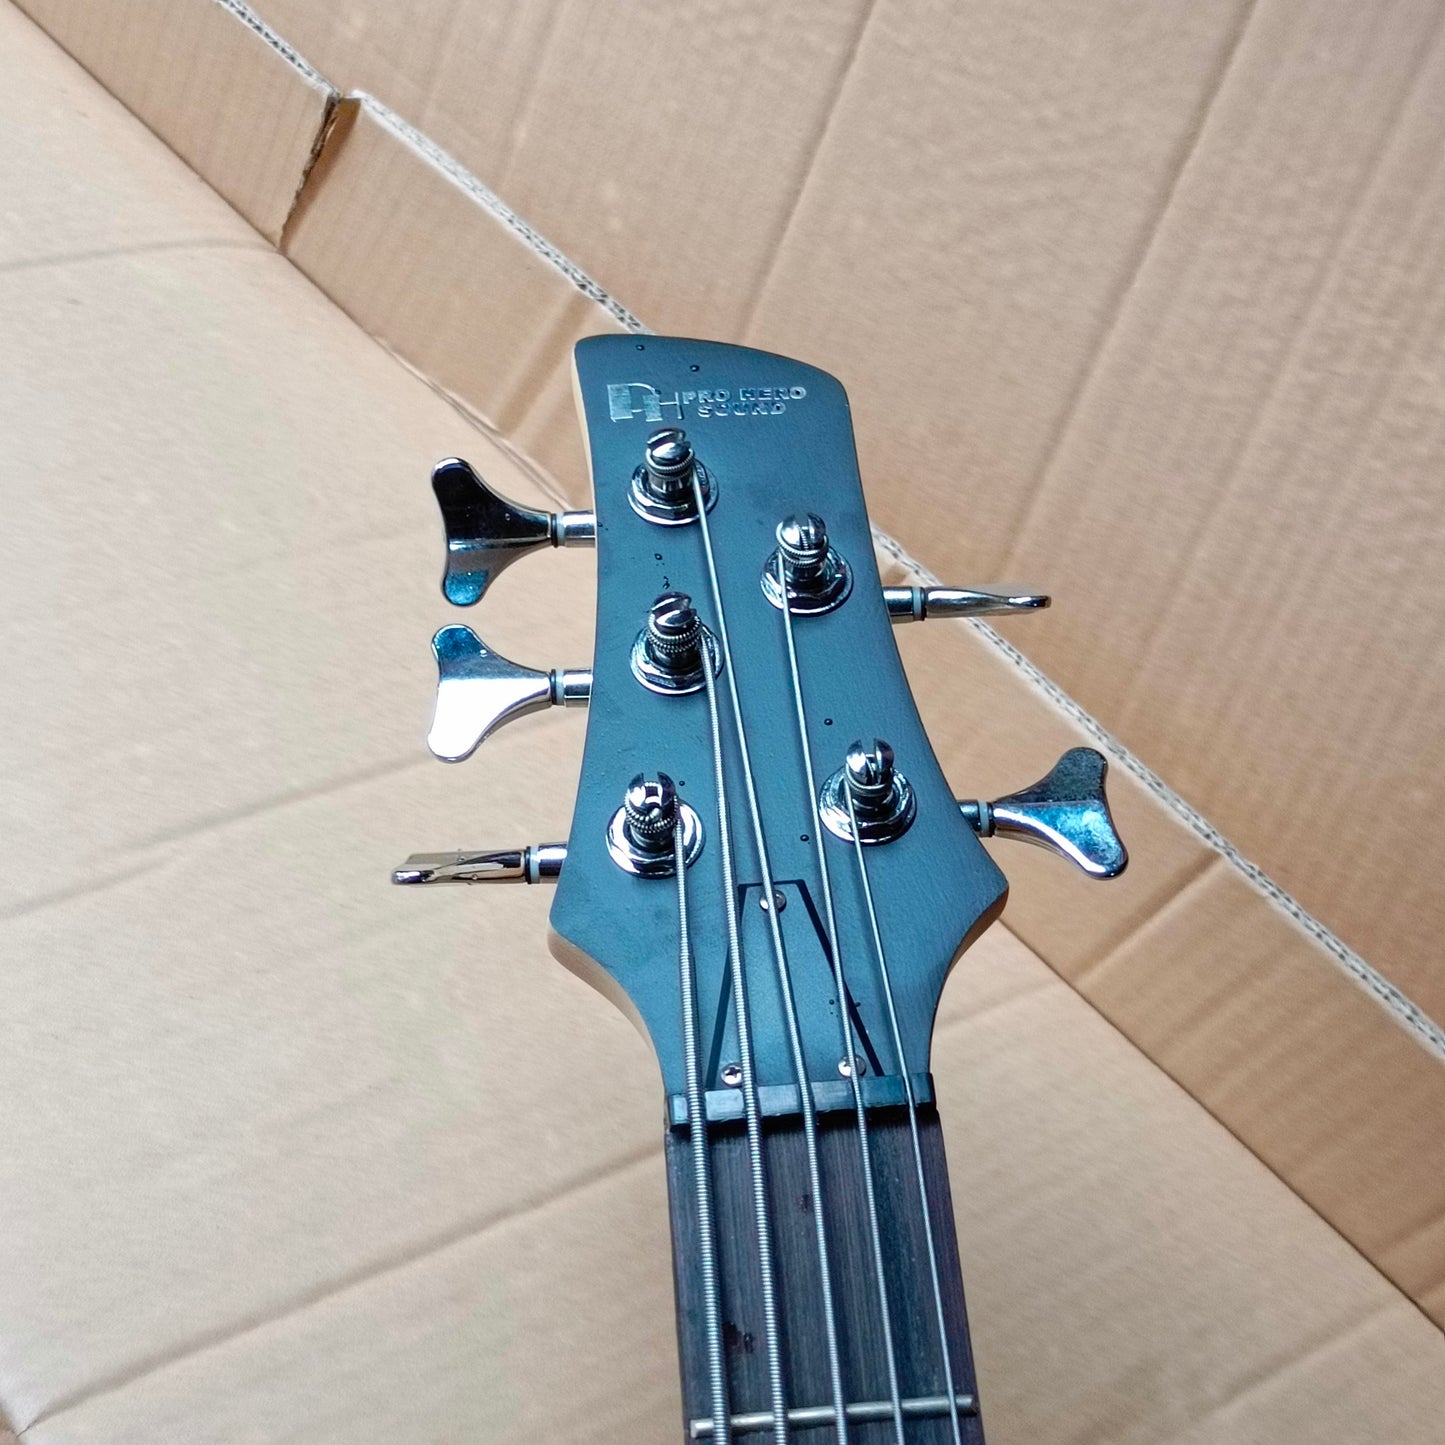 Premium 5-String 22-Flet Electric Bass Guitar with 4 volume knob  - Brand New